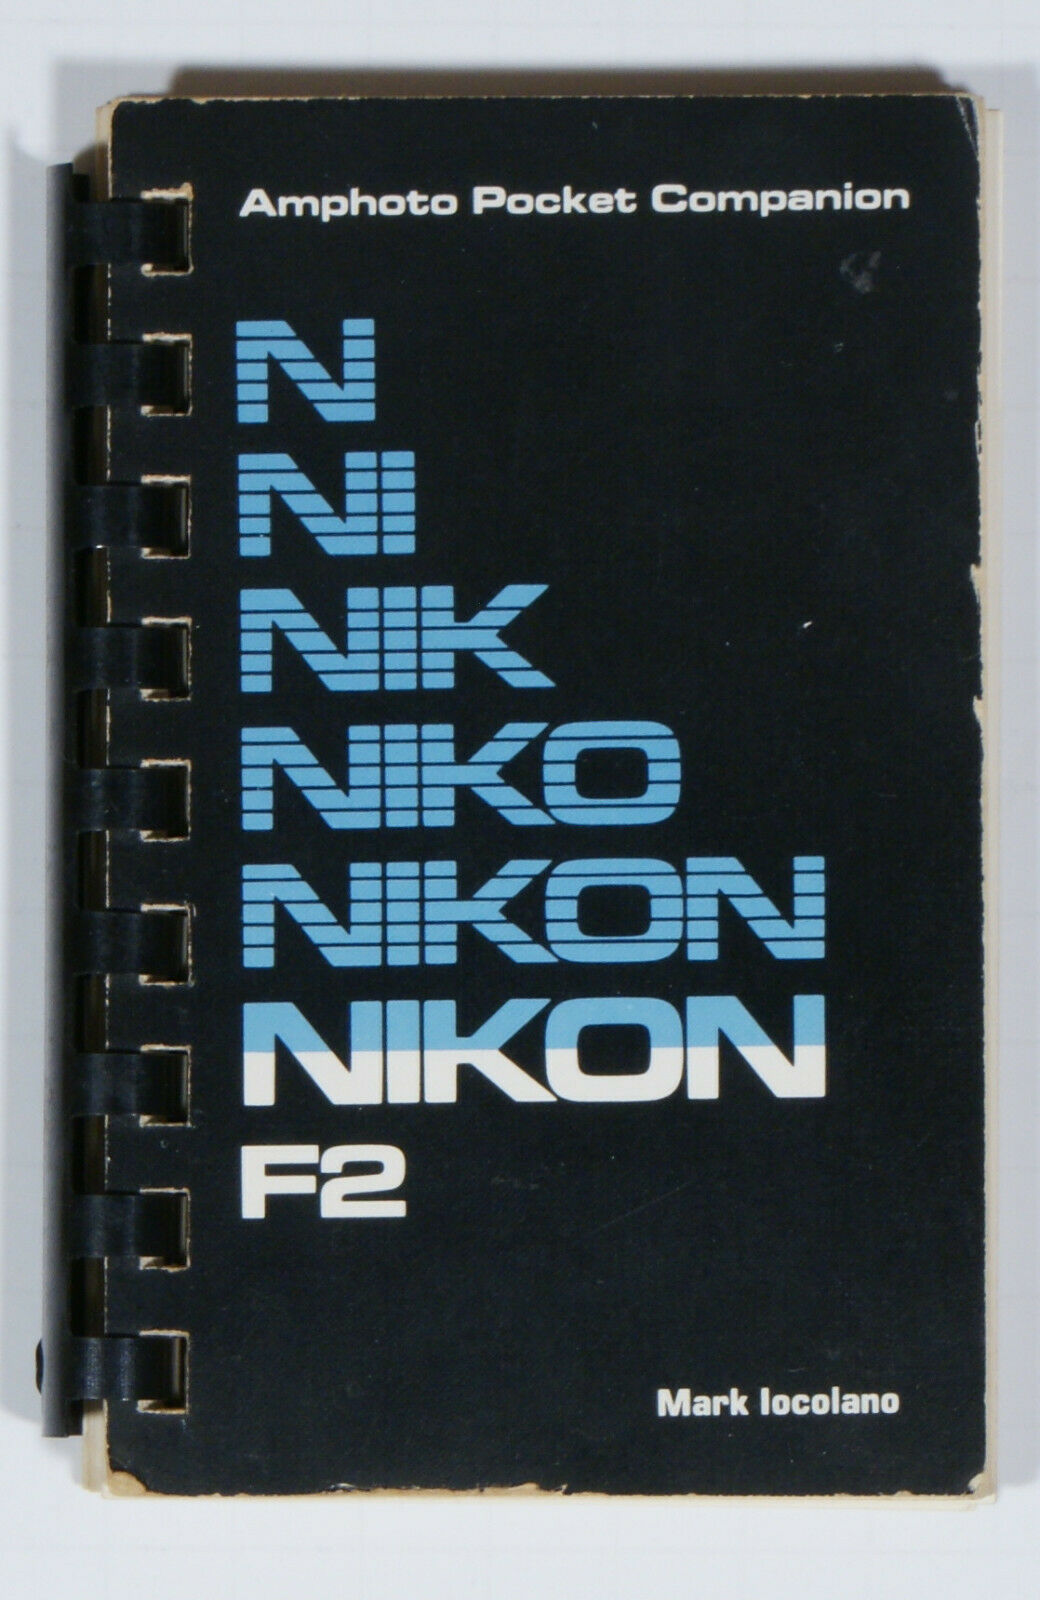 Amphoto Pocket Companion For Nikon F2 And F Slr Cameras